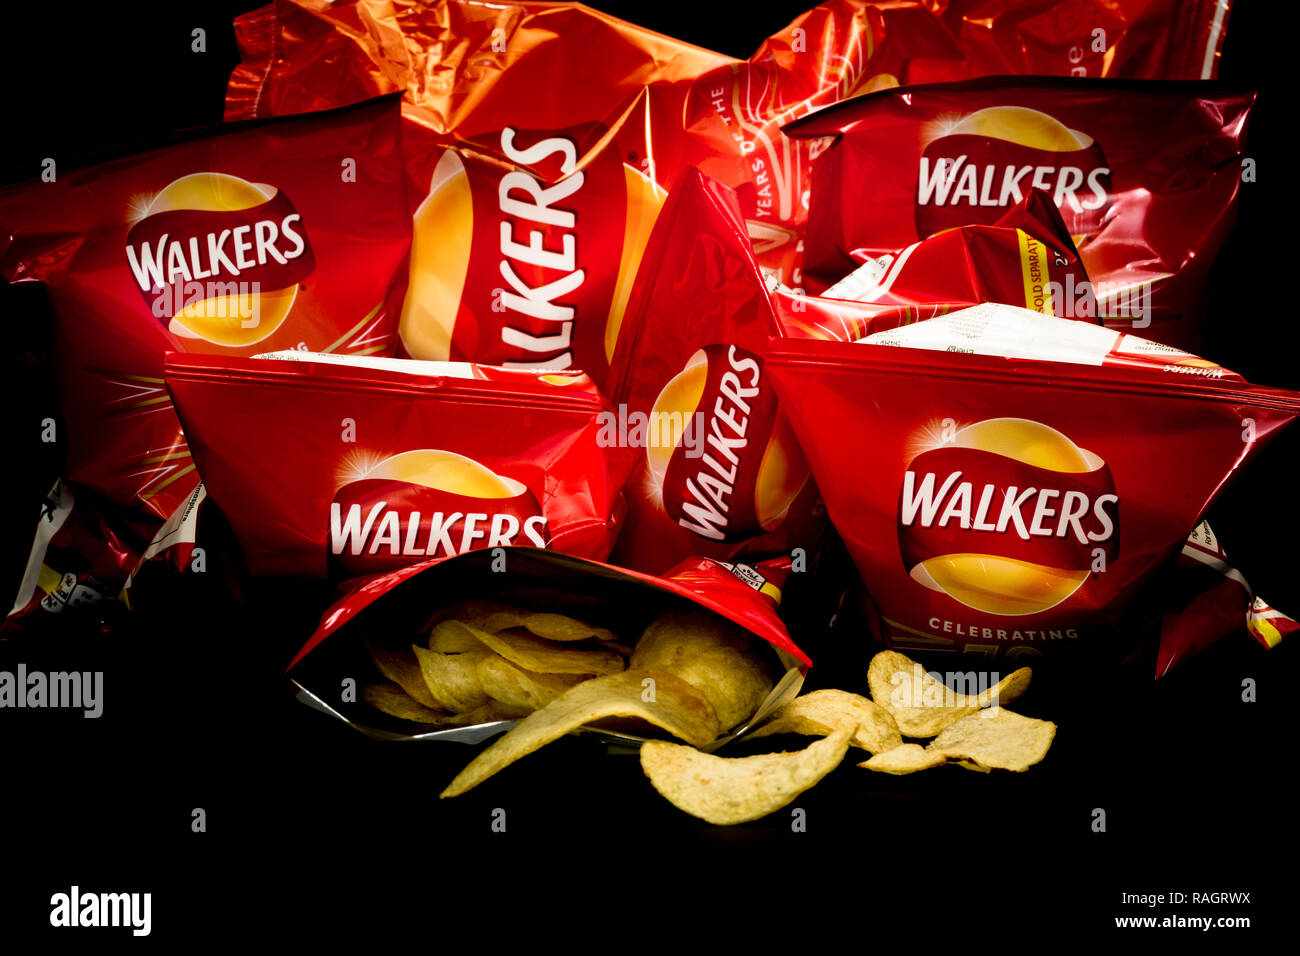 Walkers crisps. Stock Photo